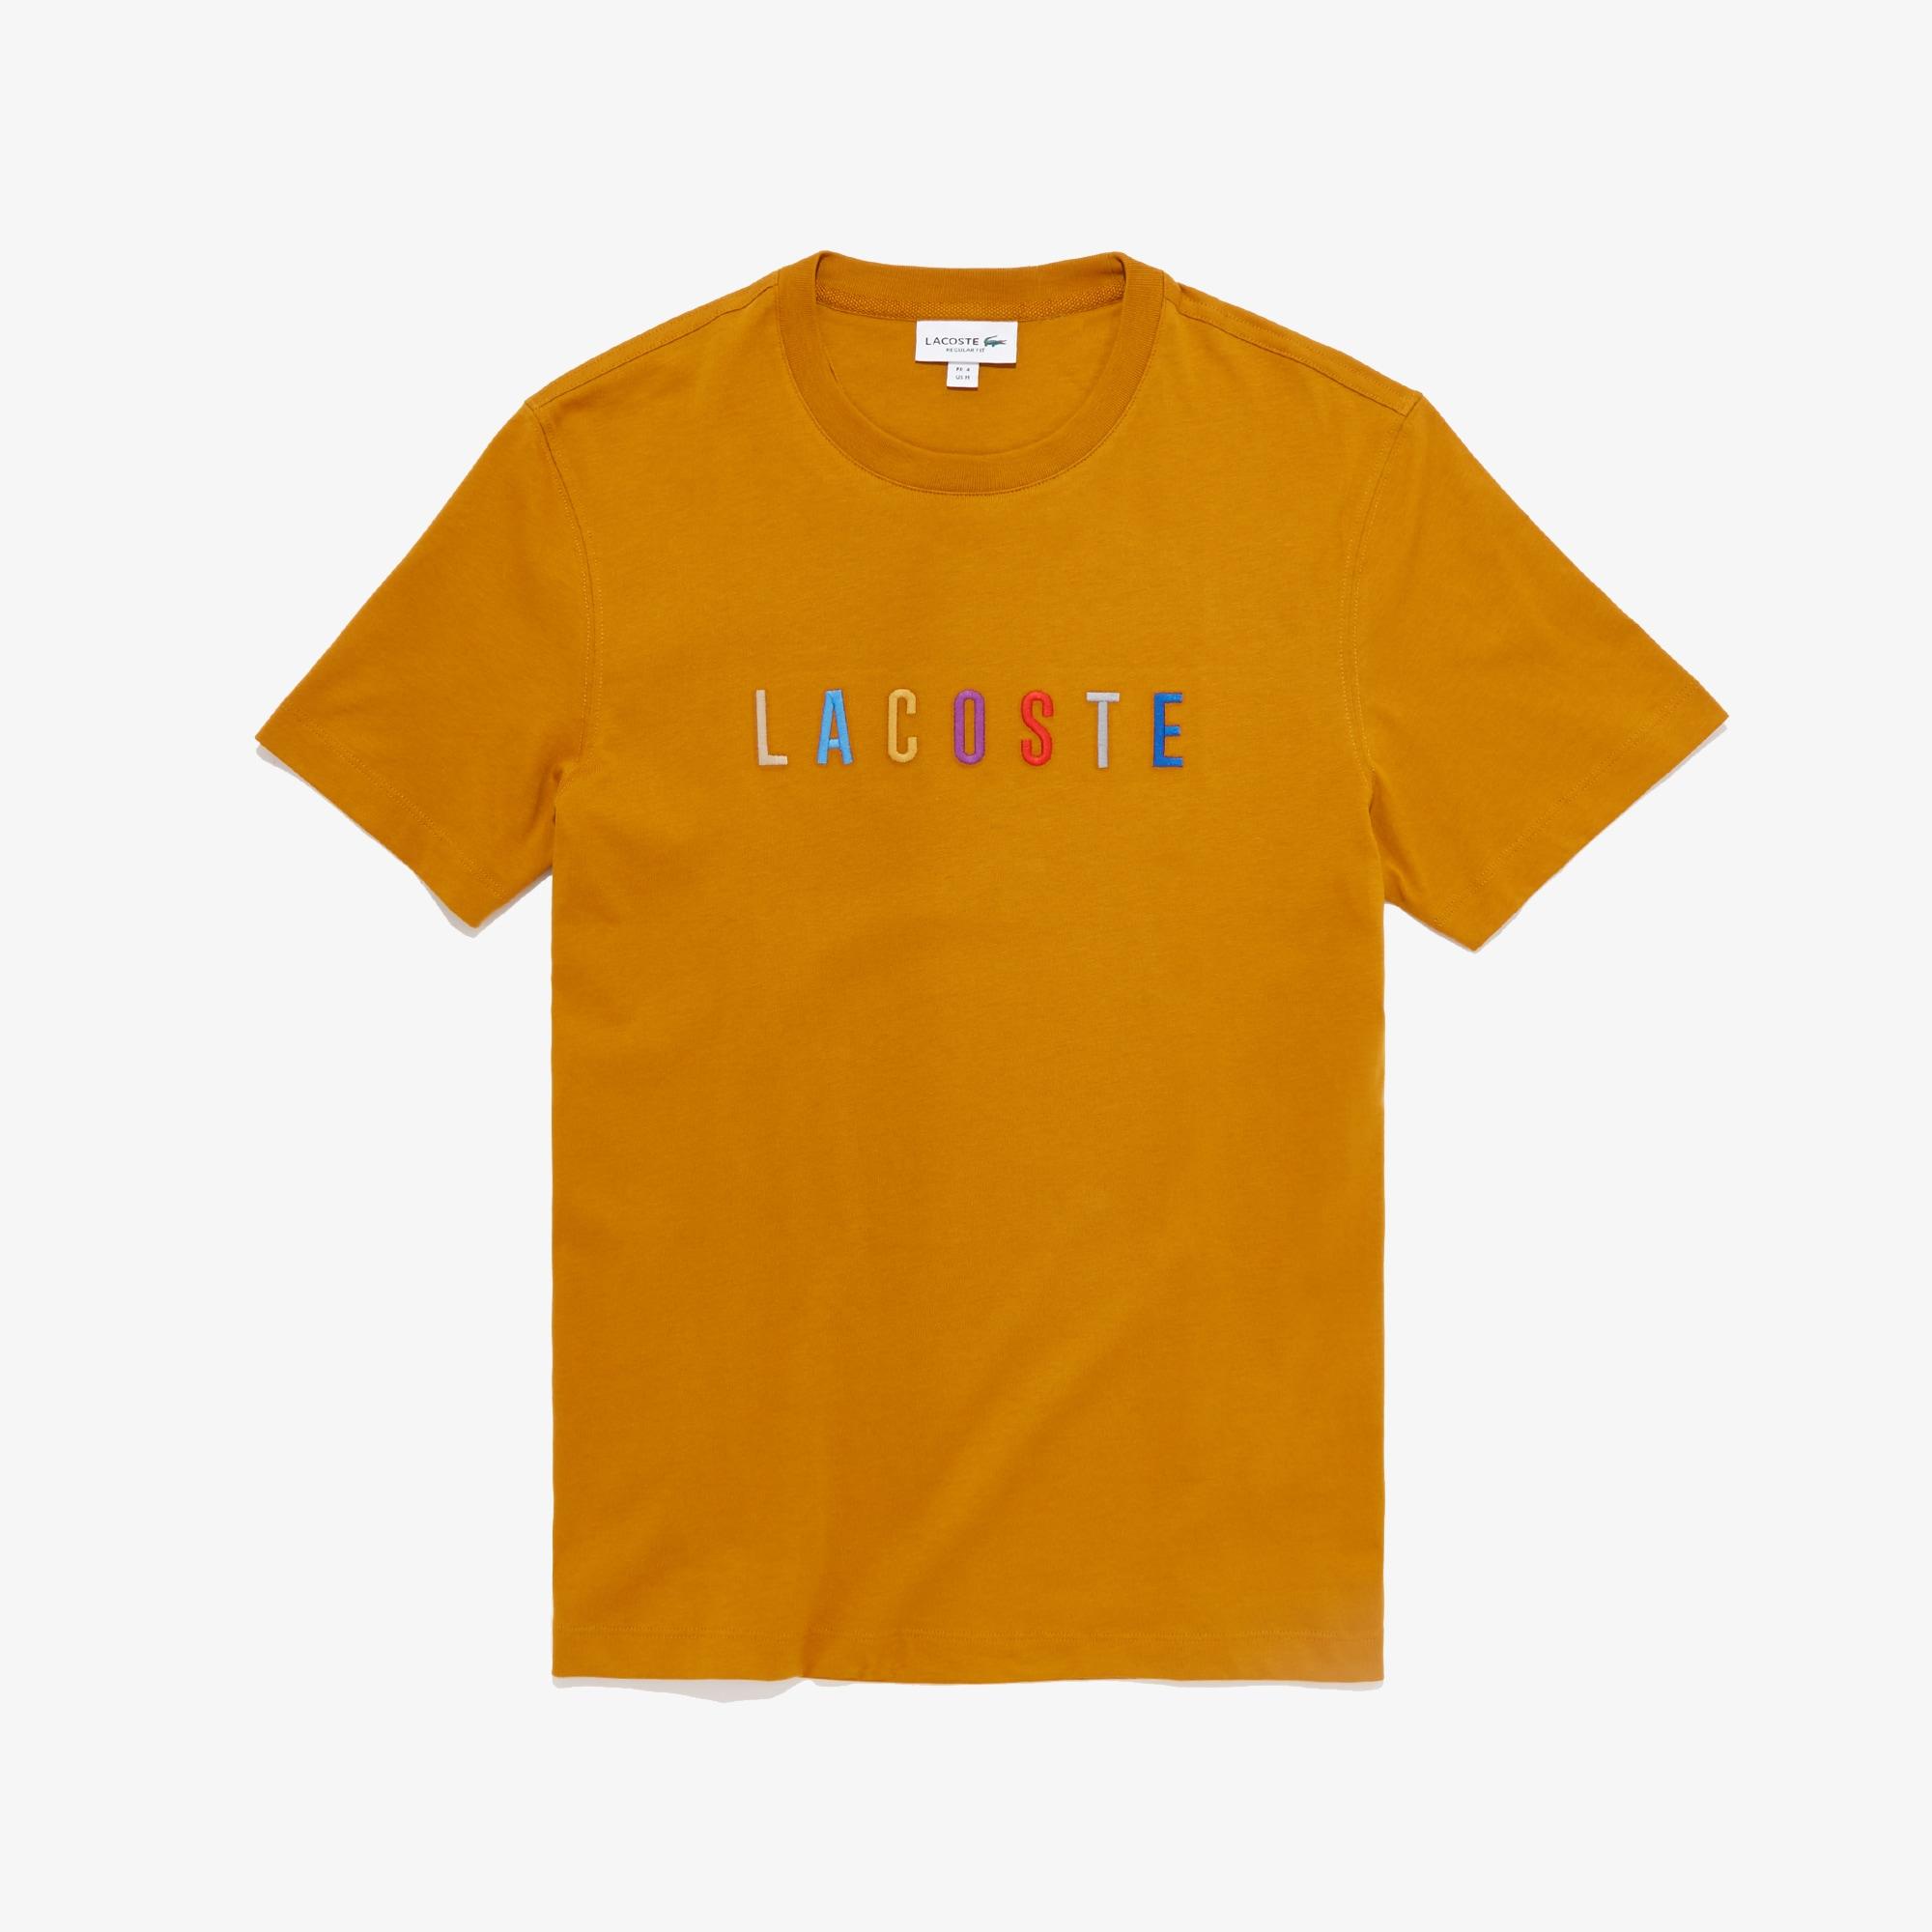 Lacoste Multicolored Logo Cotton T-shirt in Orange for Men - Lyst